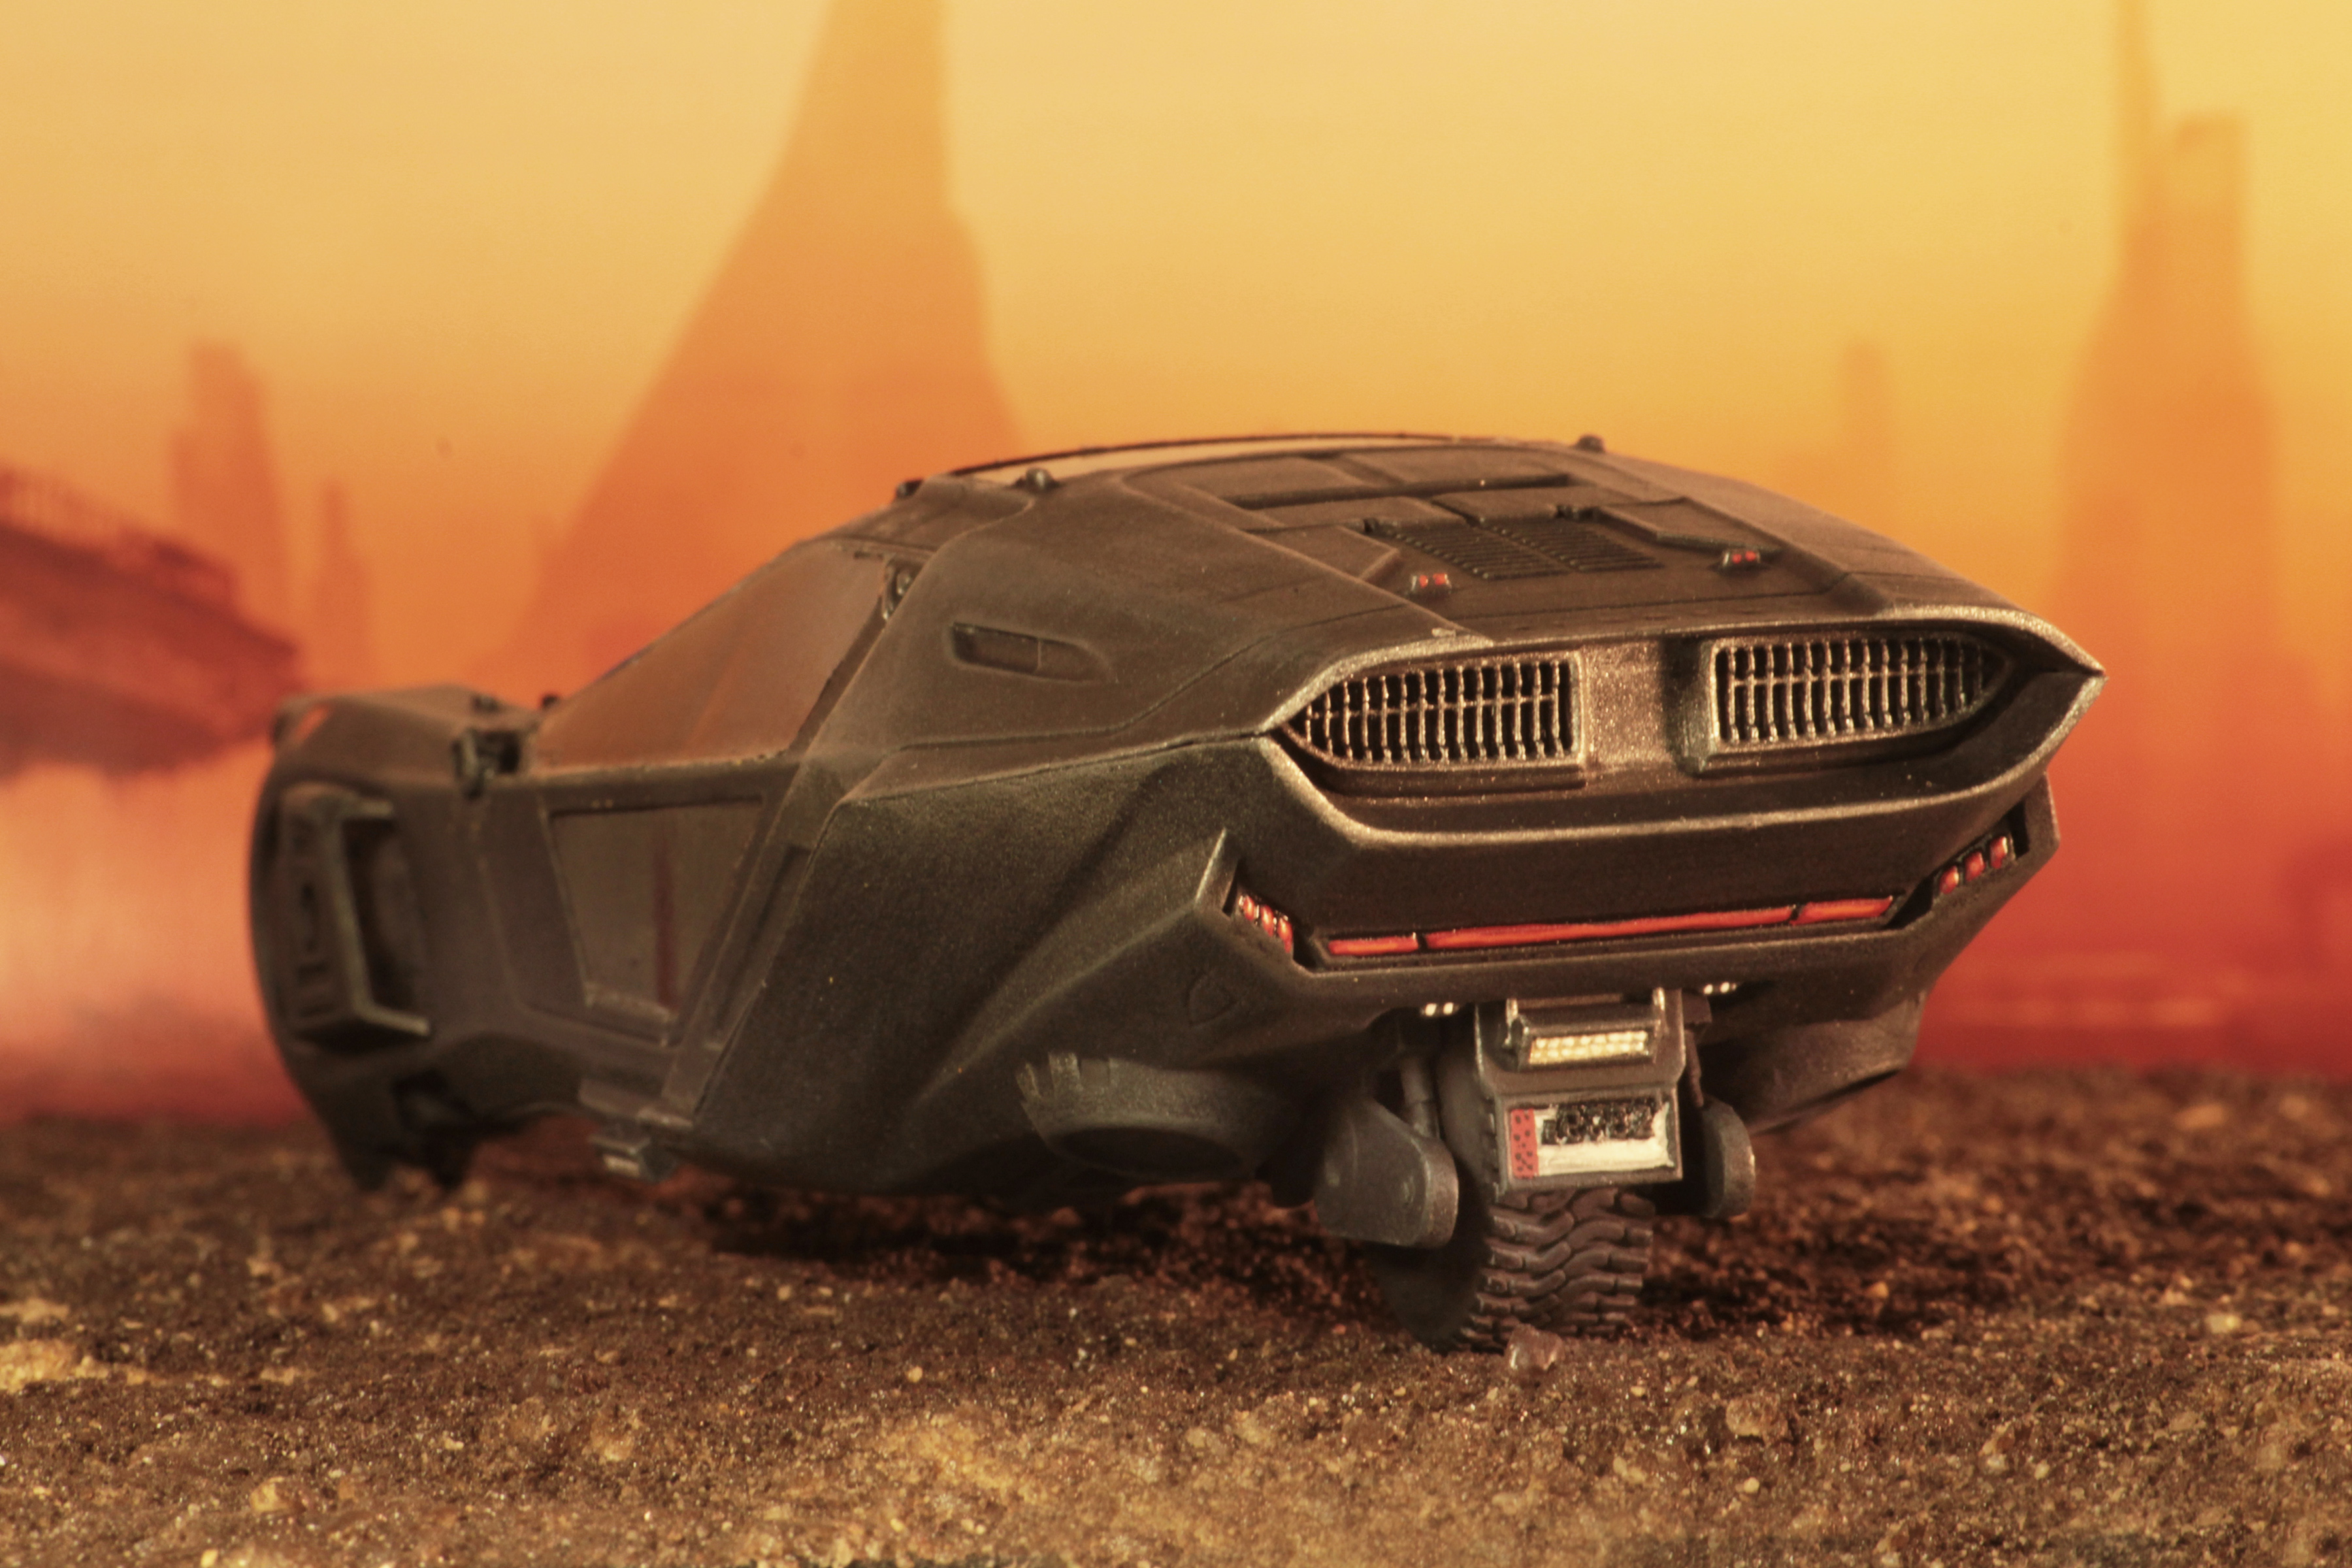 Contemporary Manufacture Spinner Blade Runner 2049 Cinemachines 6 Die Cast Replica Vehicle Neca 2017 Vitalityleisureng Com